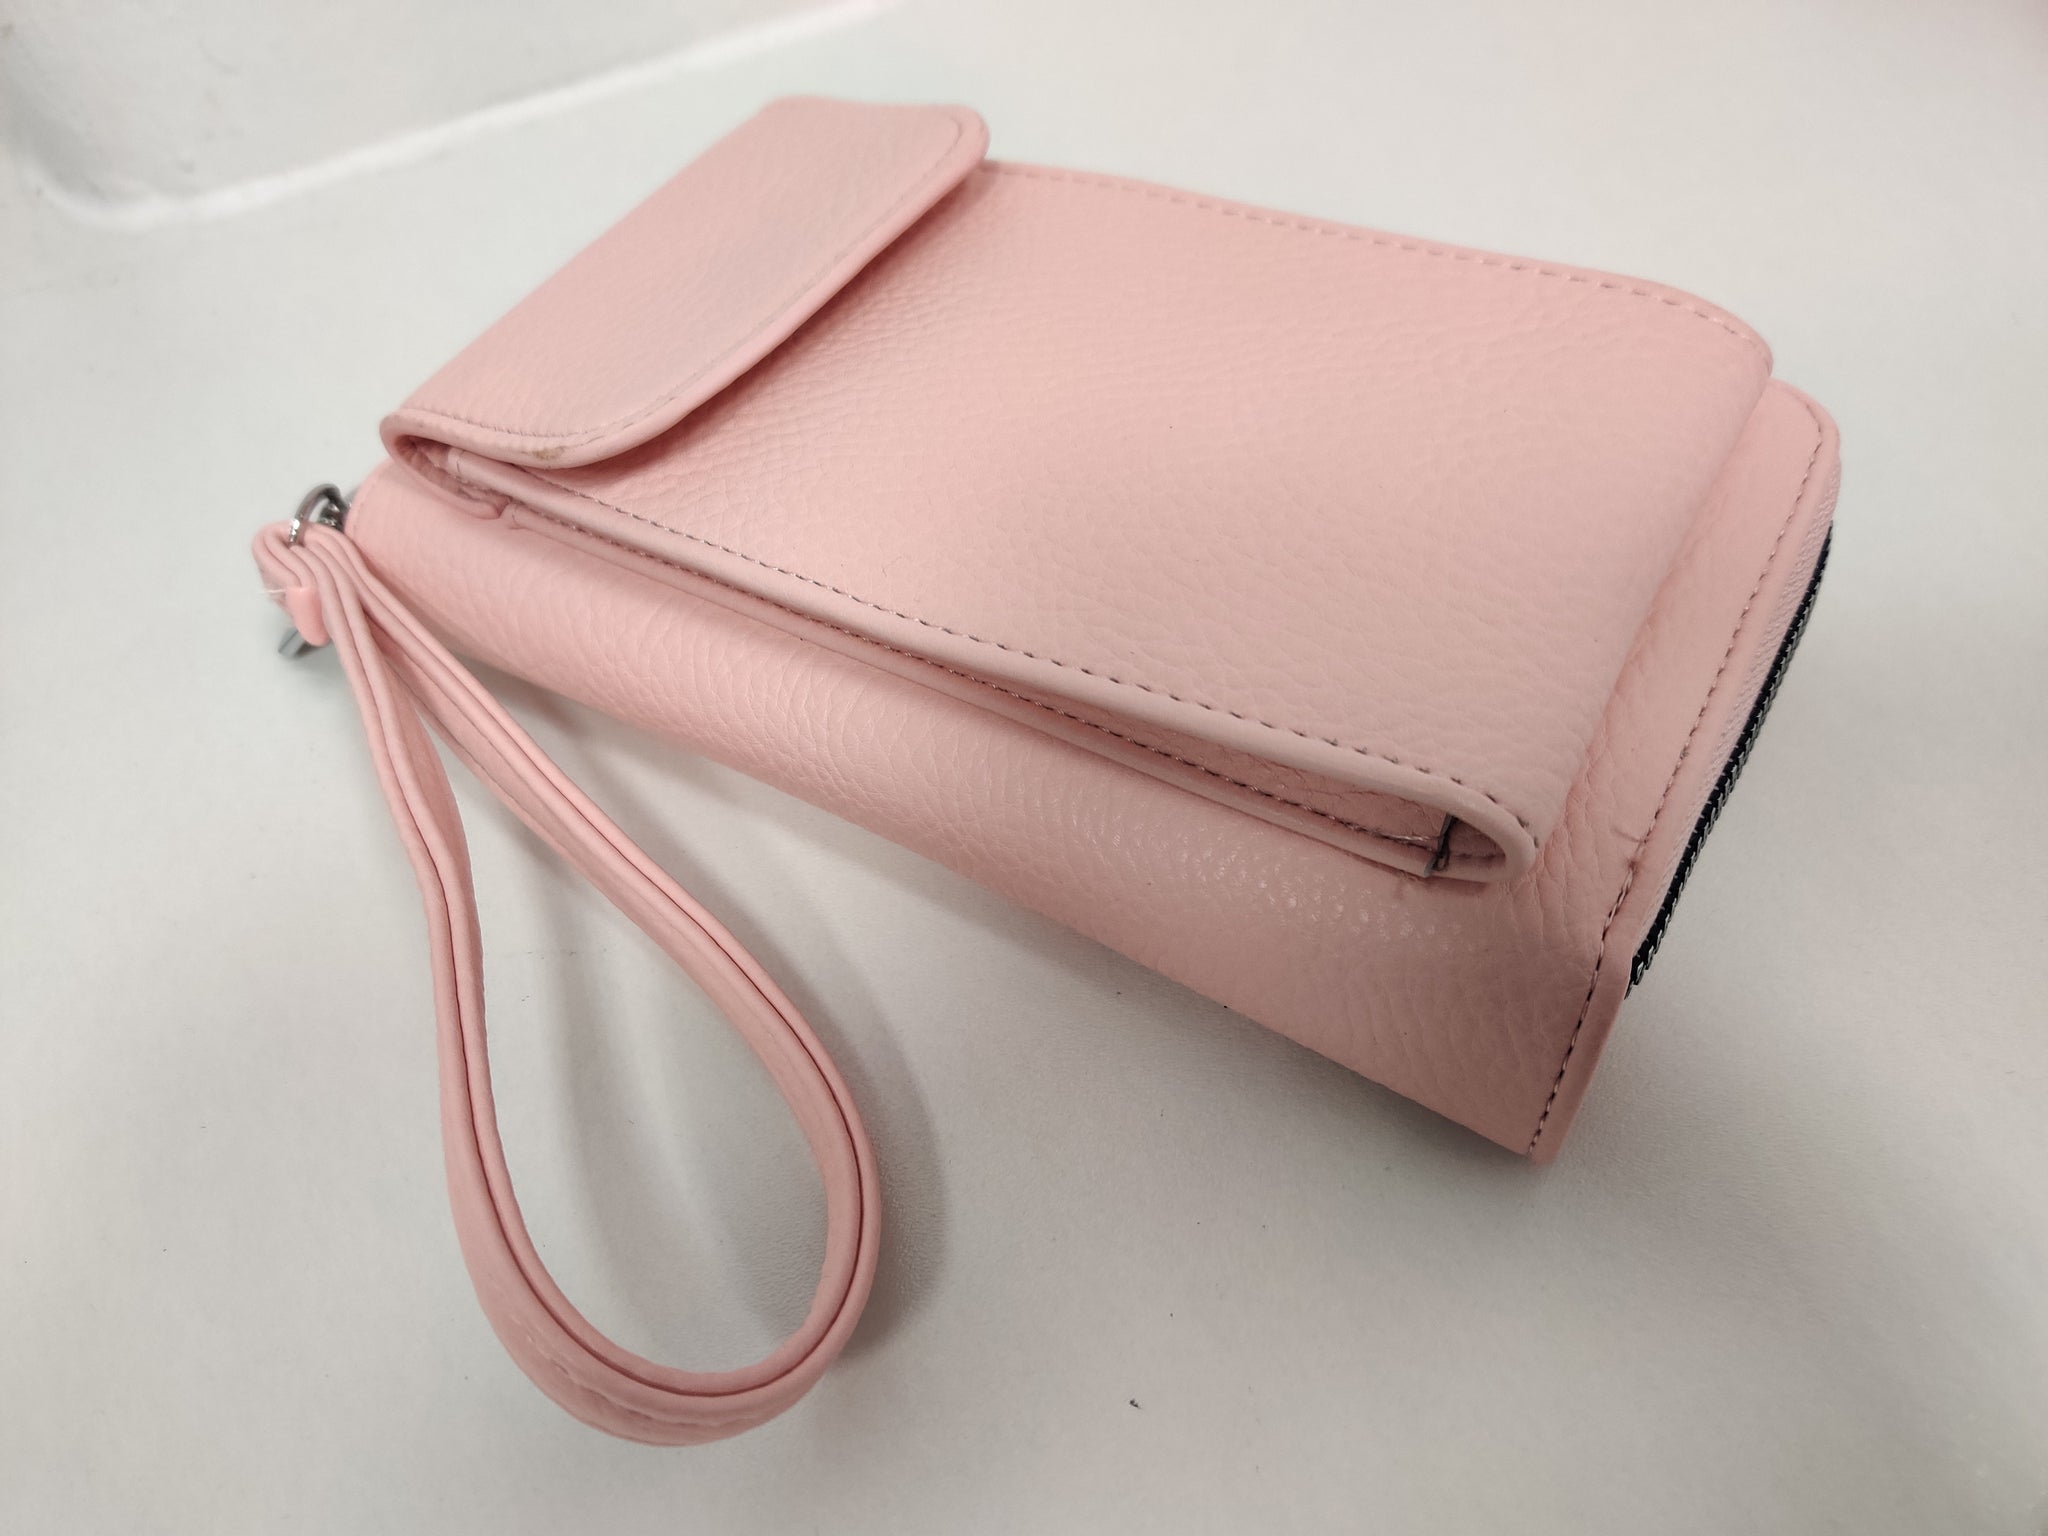 Belle Phone Purse Bag - Pale Pink